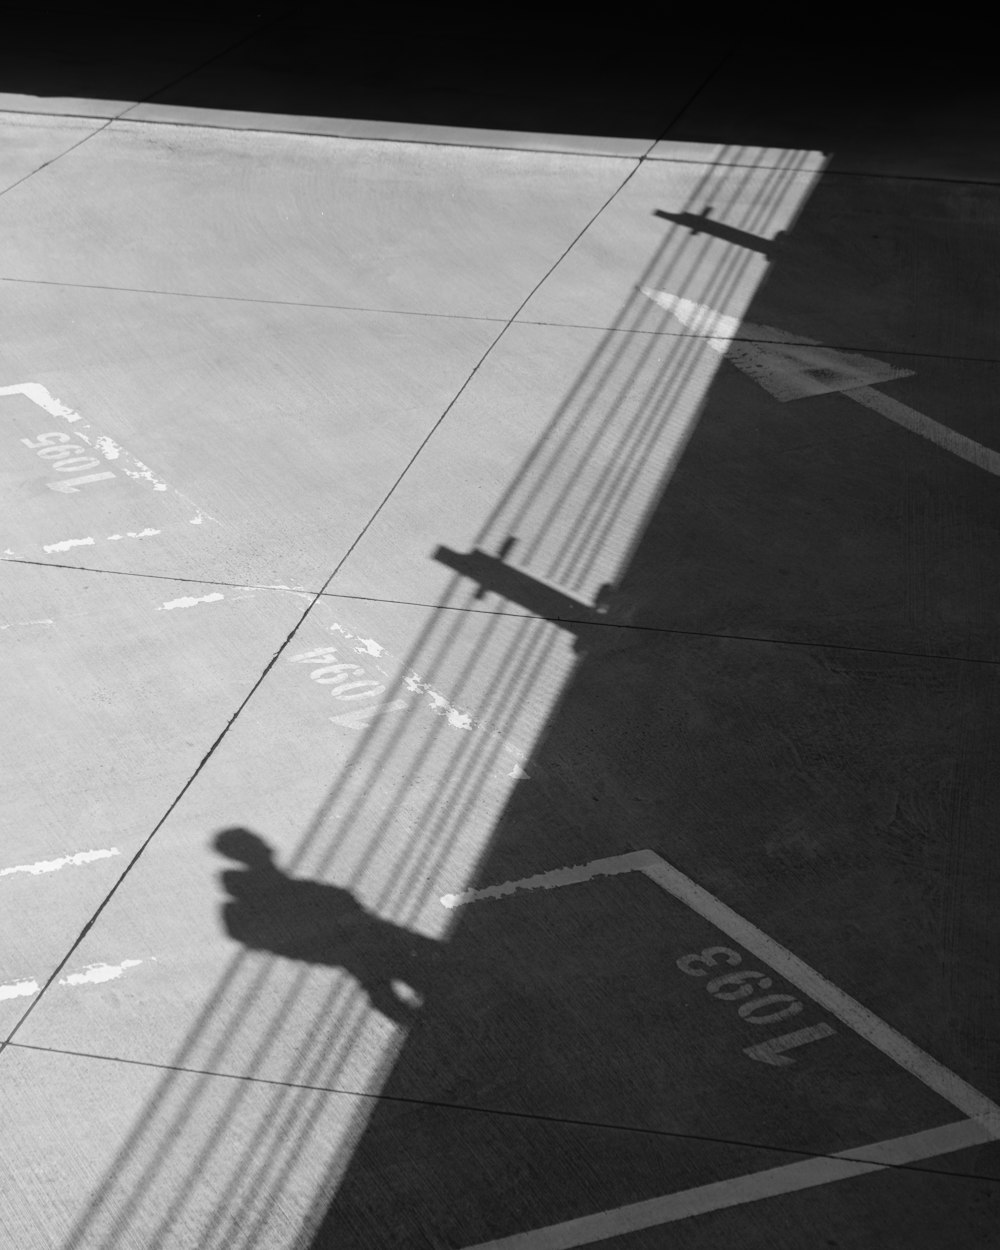 a shadow of a person riding a skateboard